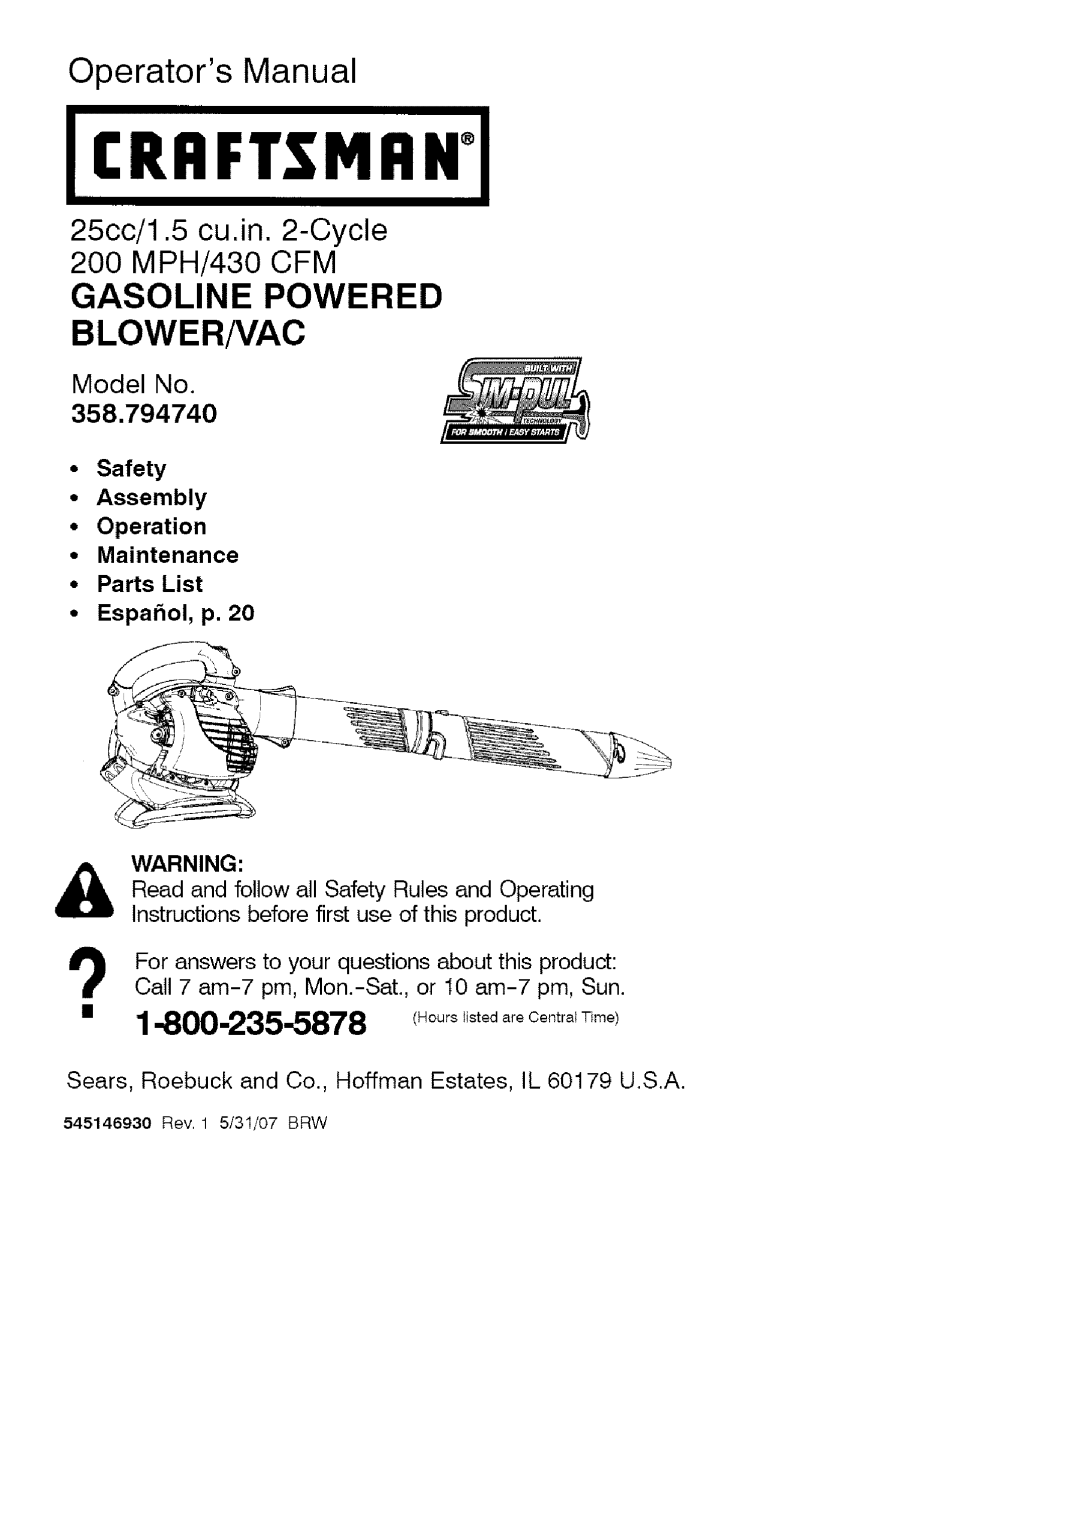 Craftsman manual Jcrfiftsmiini, Operators Manual, Gasoline Powered Blowernac, Model No, 358.794740 